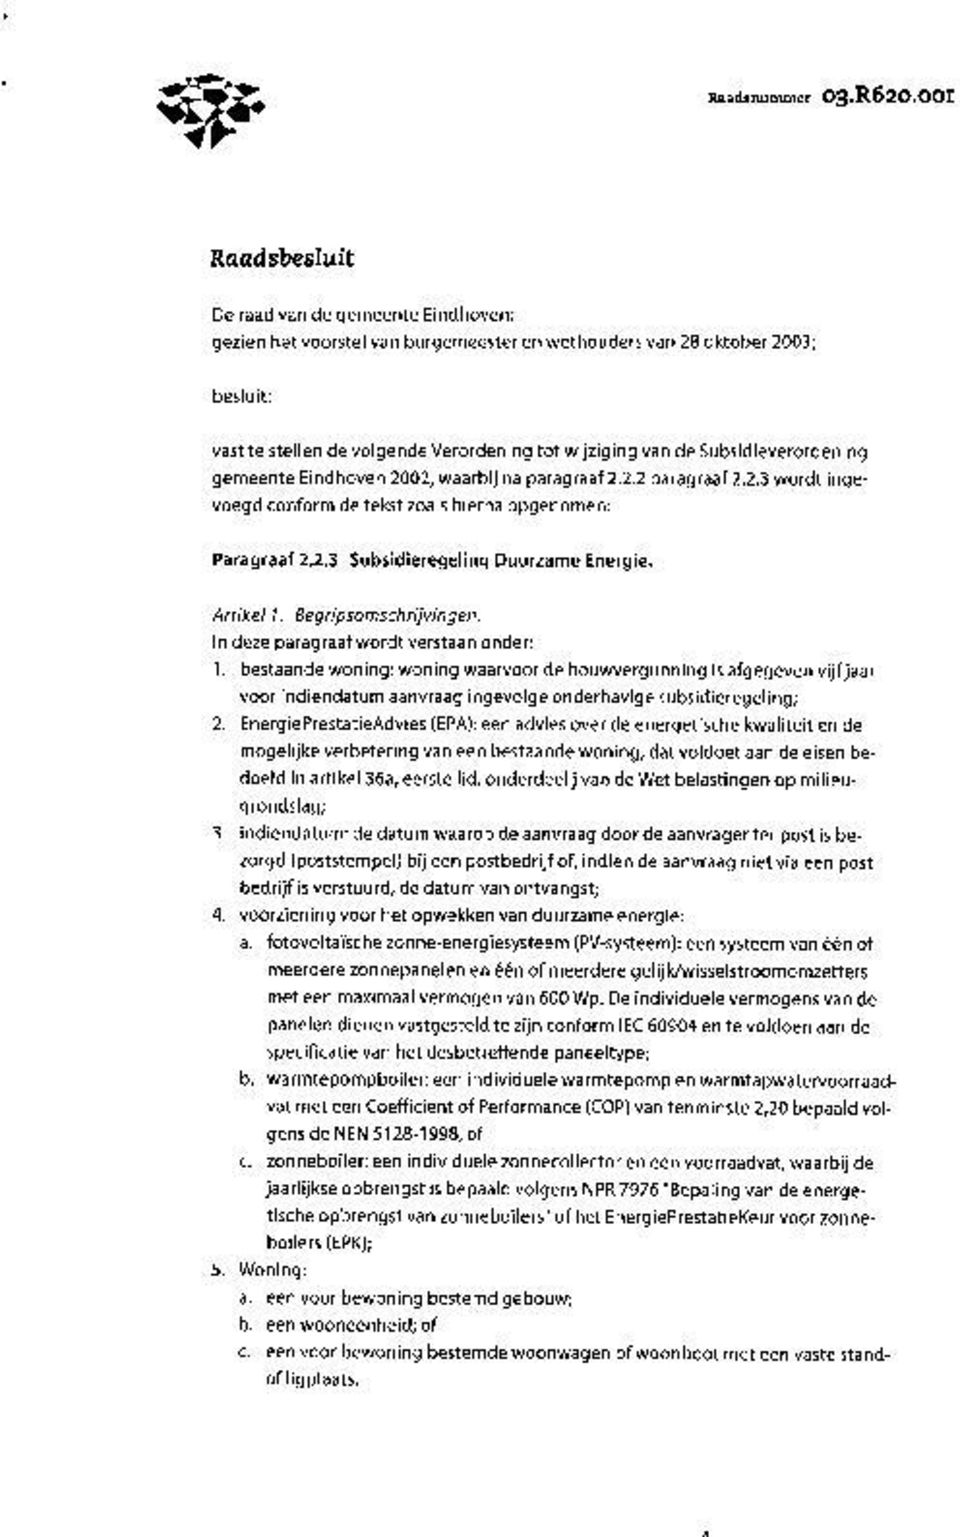 Subsidieverordening gemeente Eindhoven 2002, waarbij na paragraaf 2.2.2 paragraaf 2.2.3 wordt ingevoegd conform de tekst zoals hierna opgenomen: Paragraaf 2.2.3 Subsidieregeling Duurzame Energie.